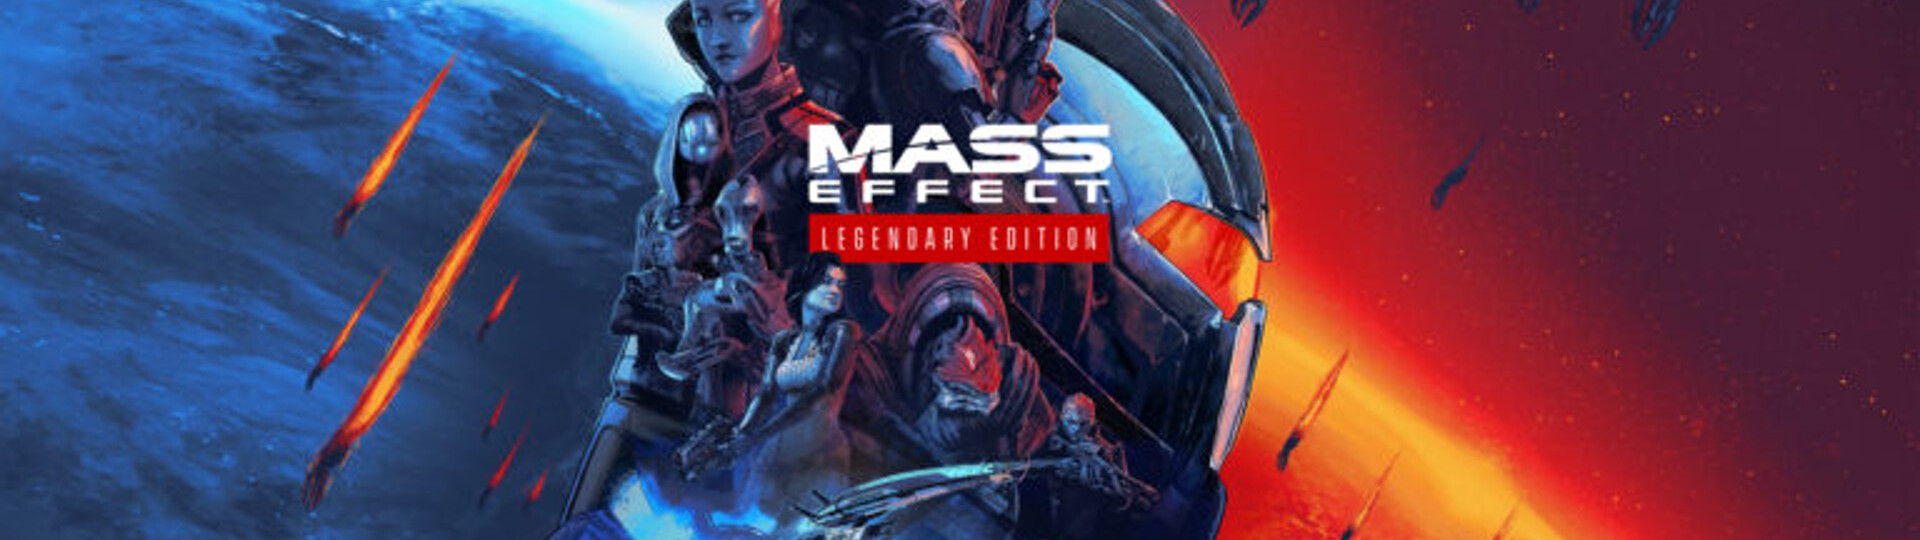 Oznámena Mass Effect Legendary Edition pro PS4 | Videa